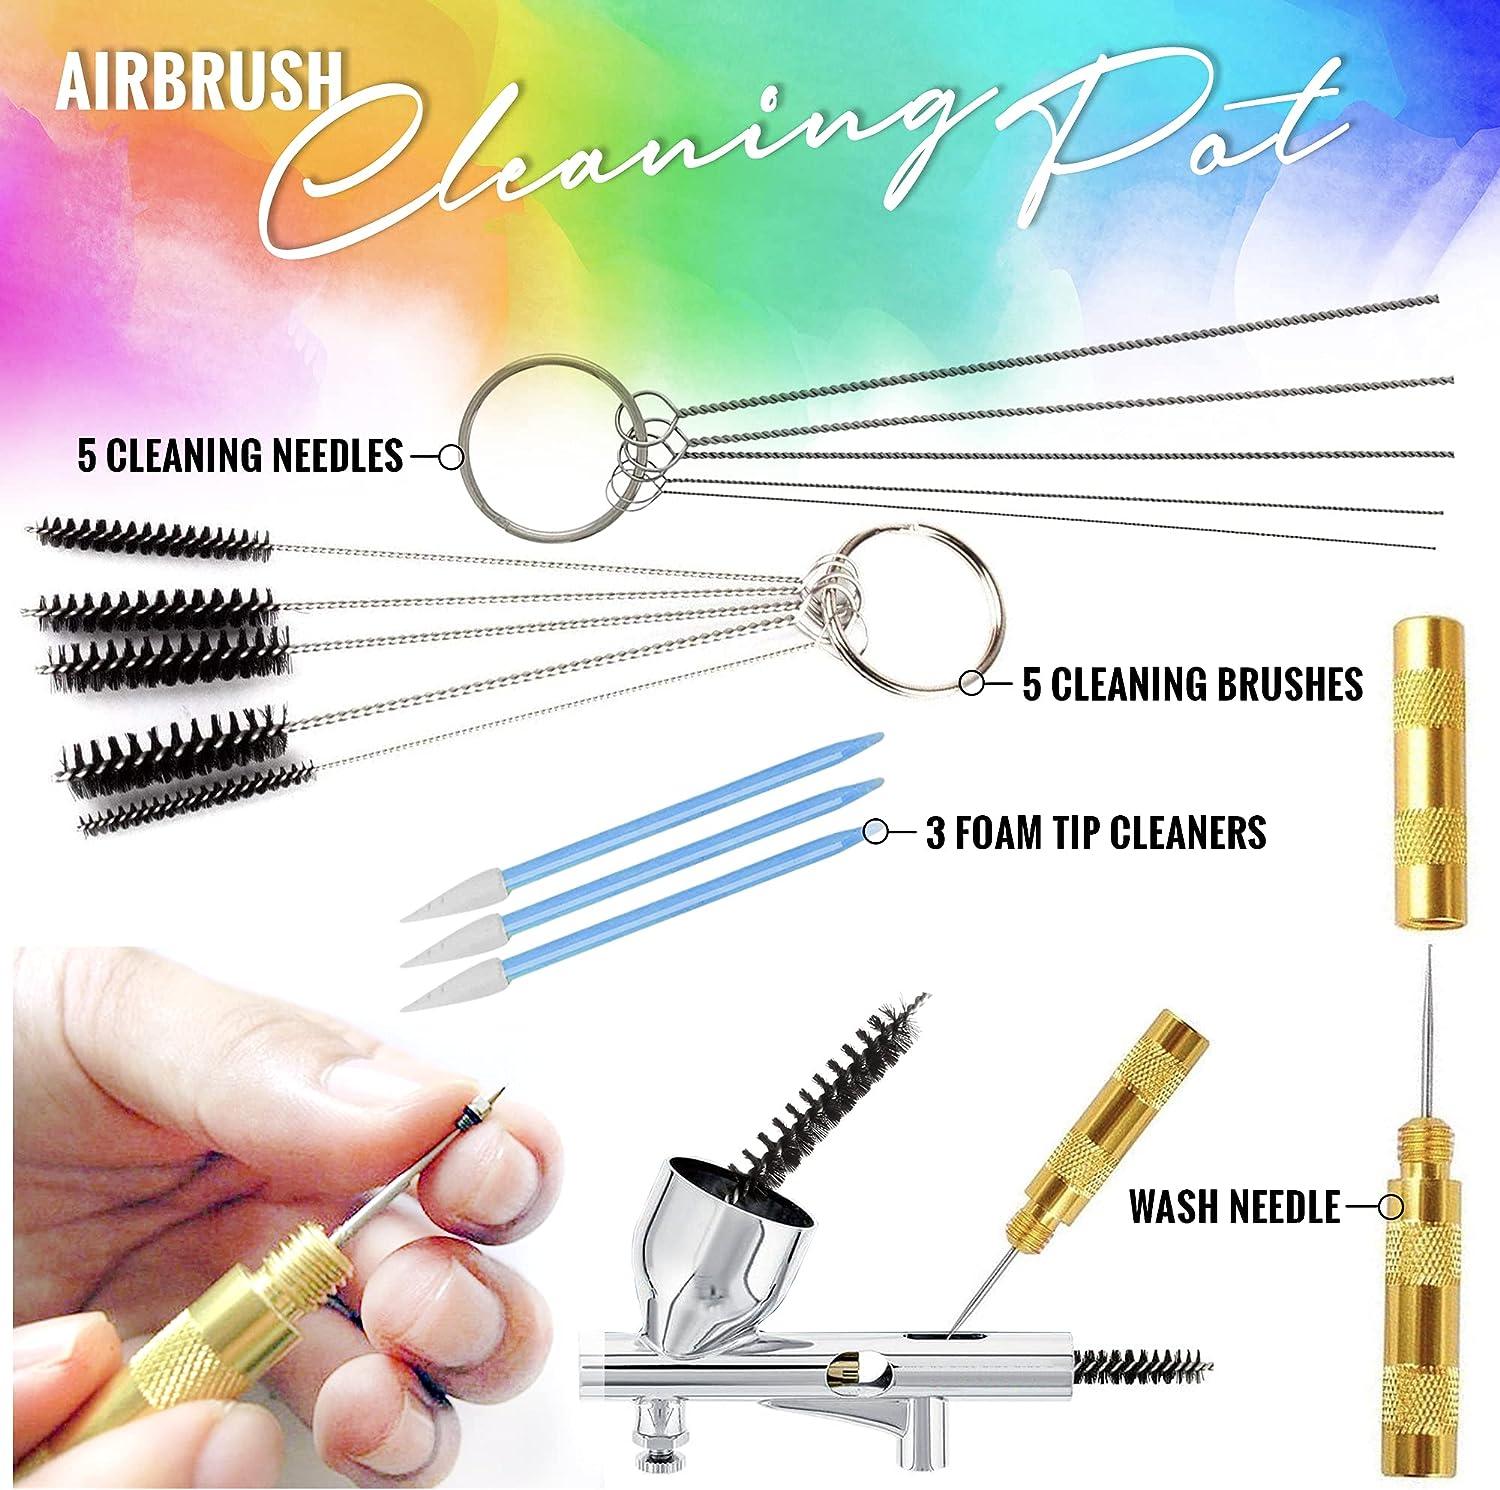 Airbrush Cleaning Set - Everything Airbrush